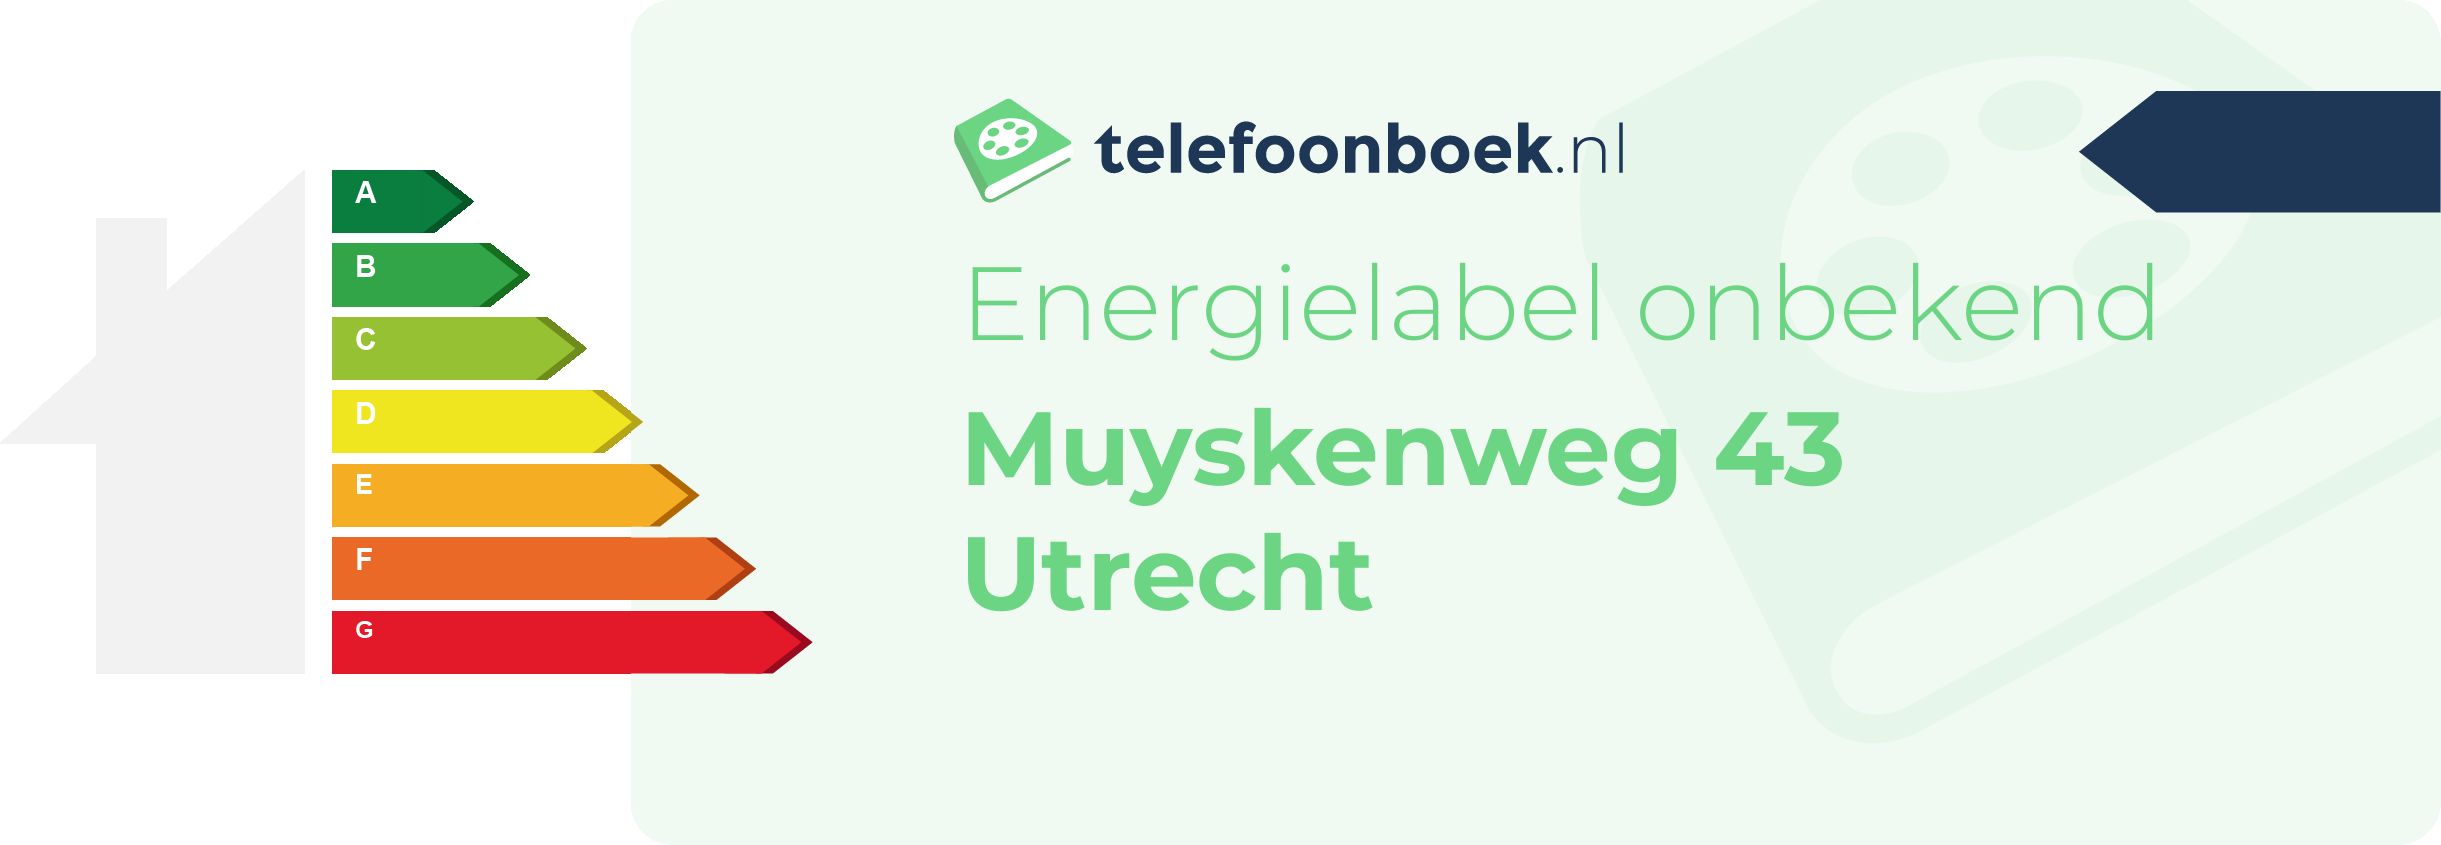 Energielabel Muyskenweg 43 Utrecht